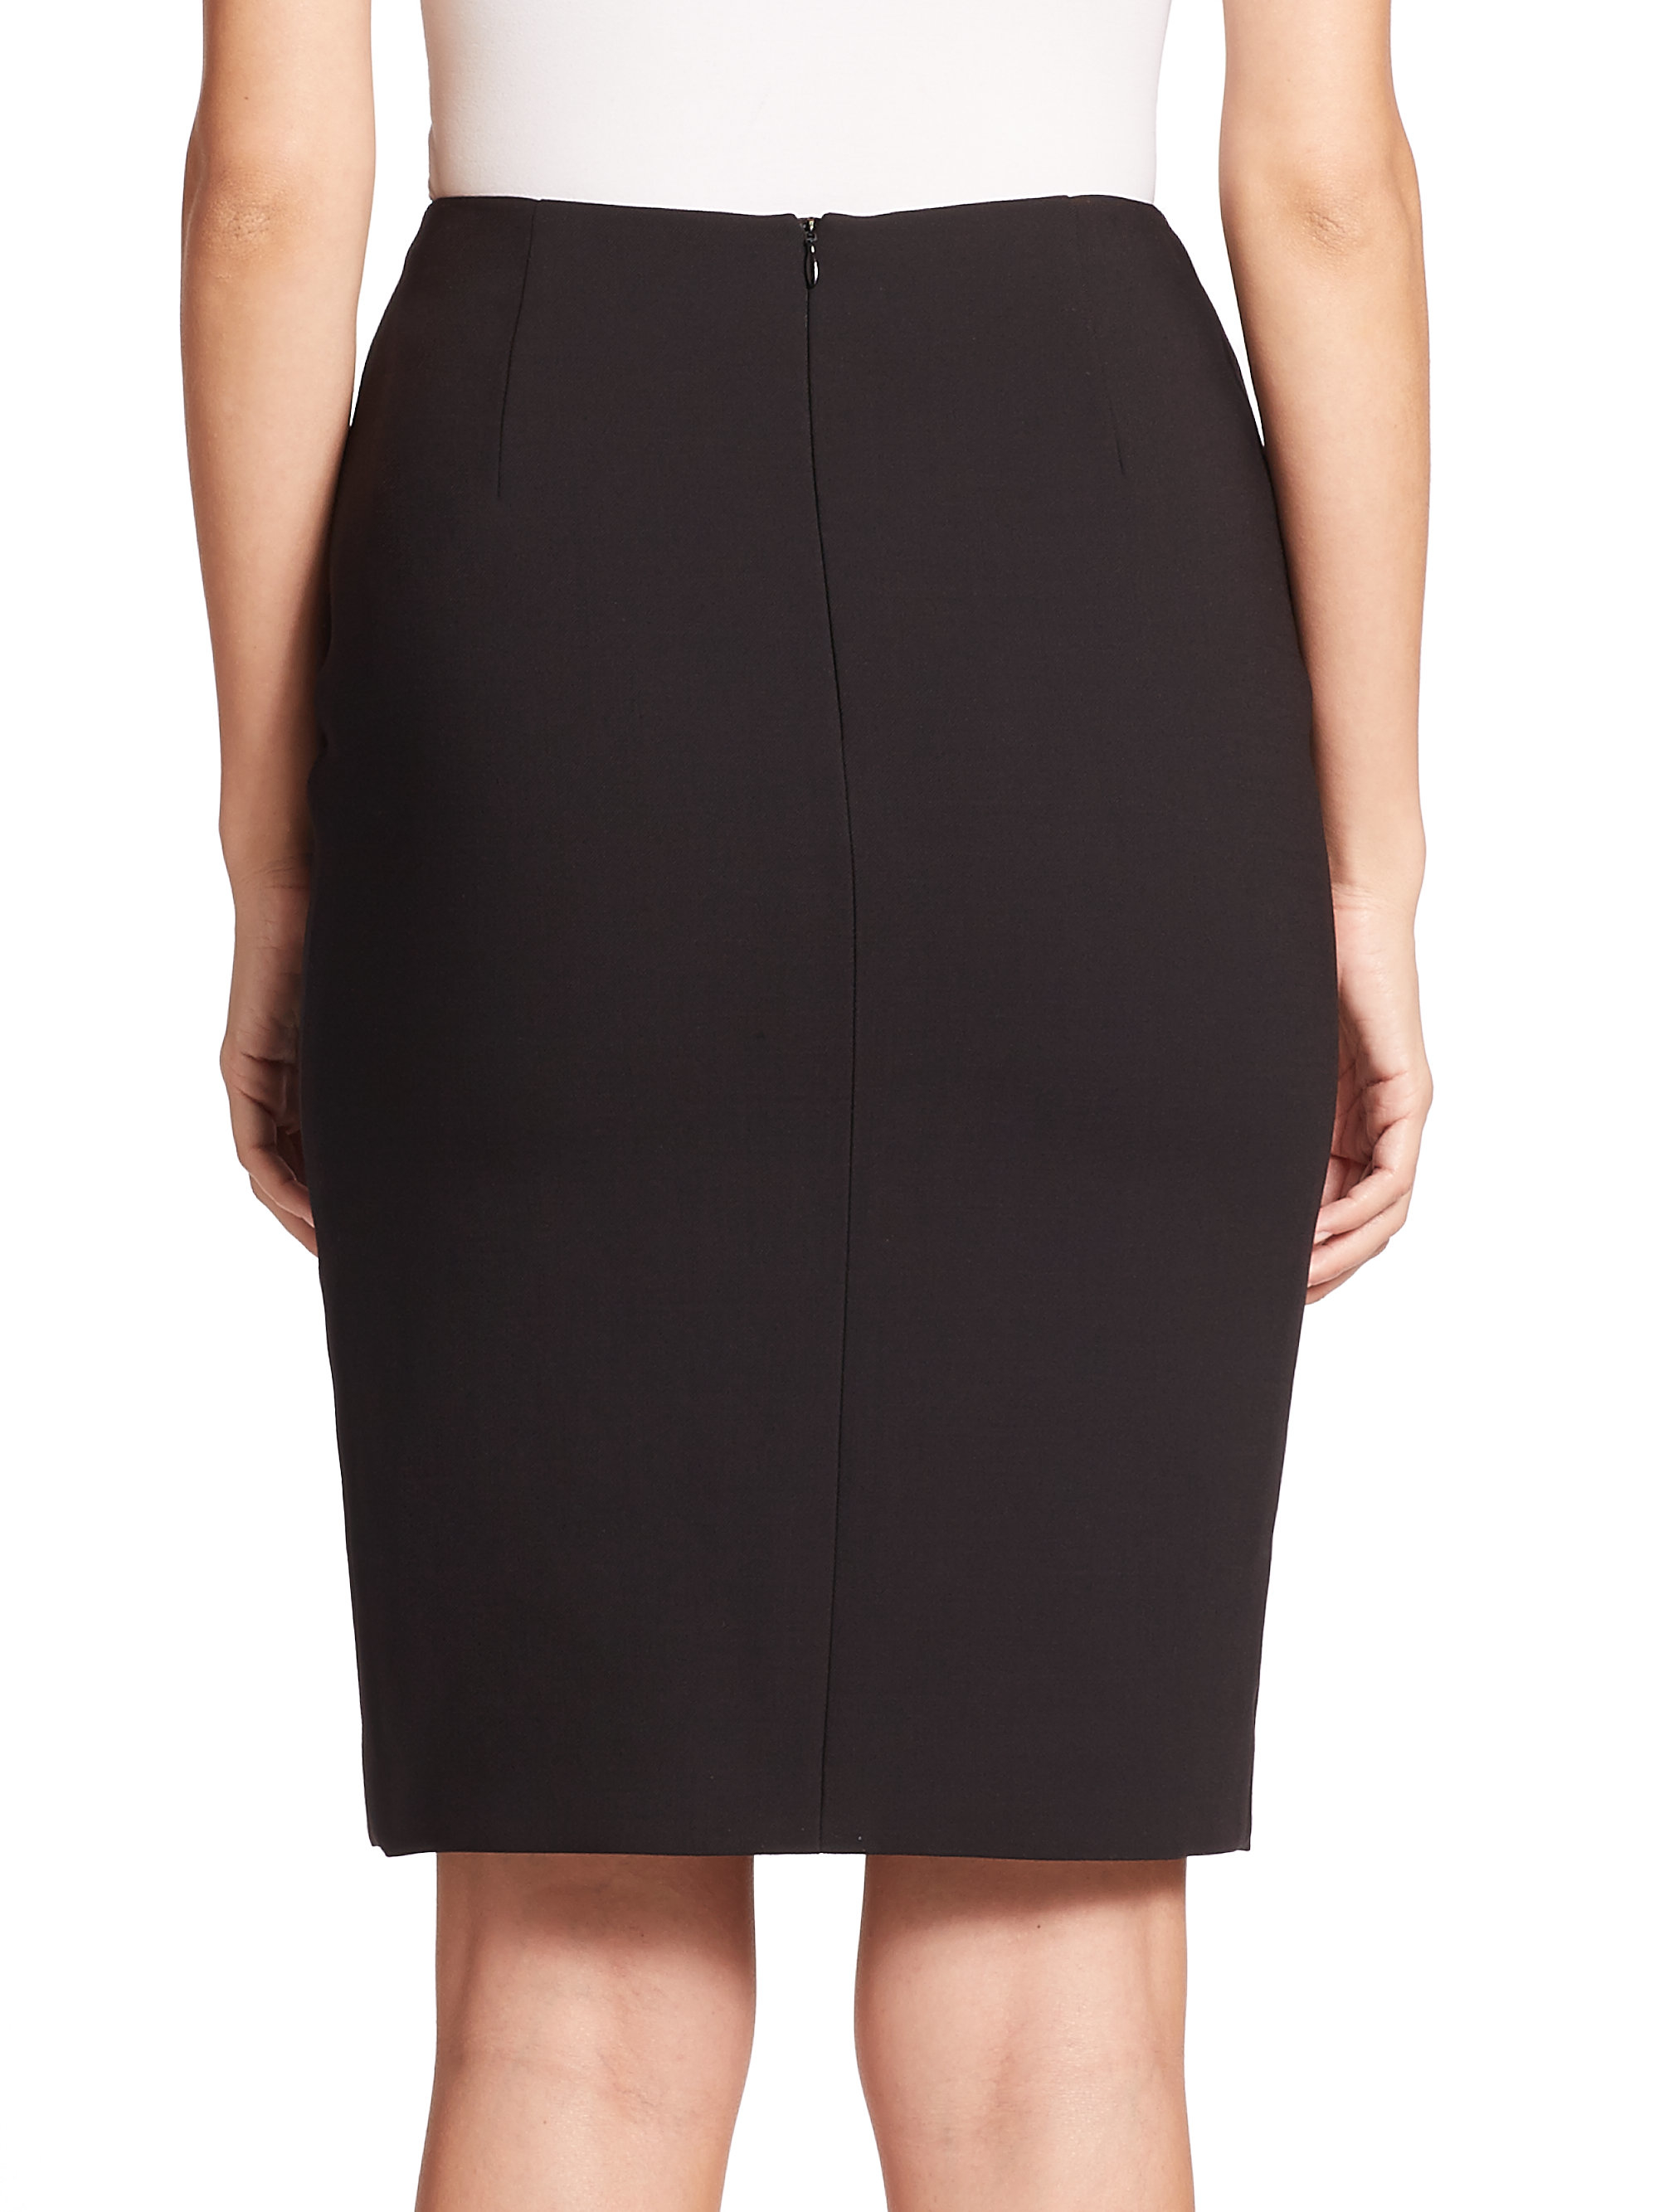 Lyst - Escada Seam-detail Pencil Skirt in Black